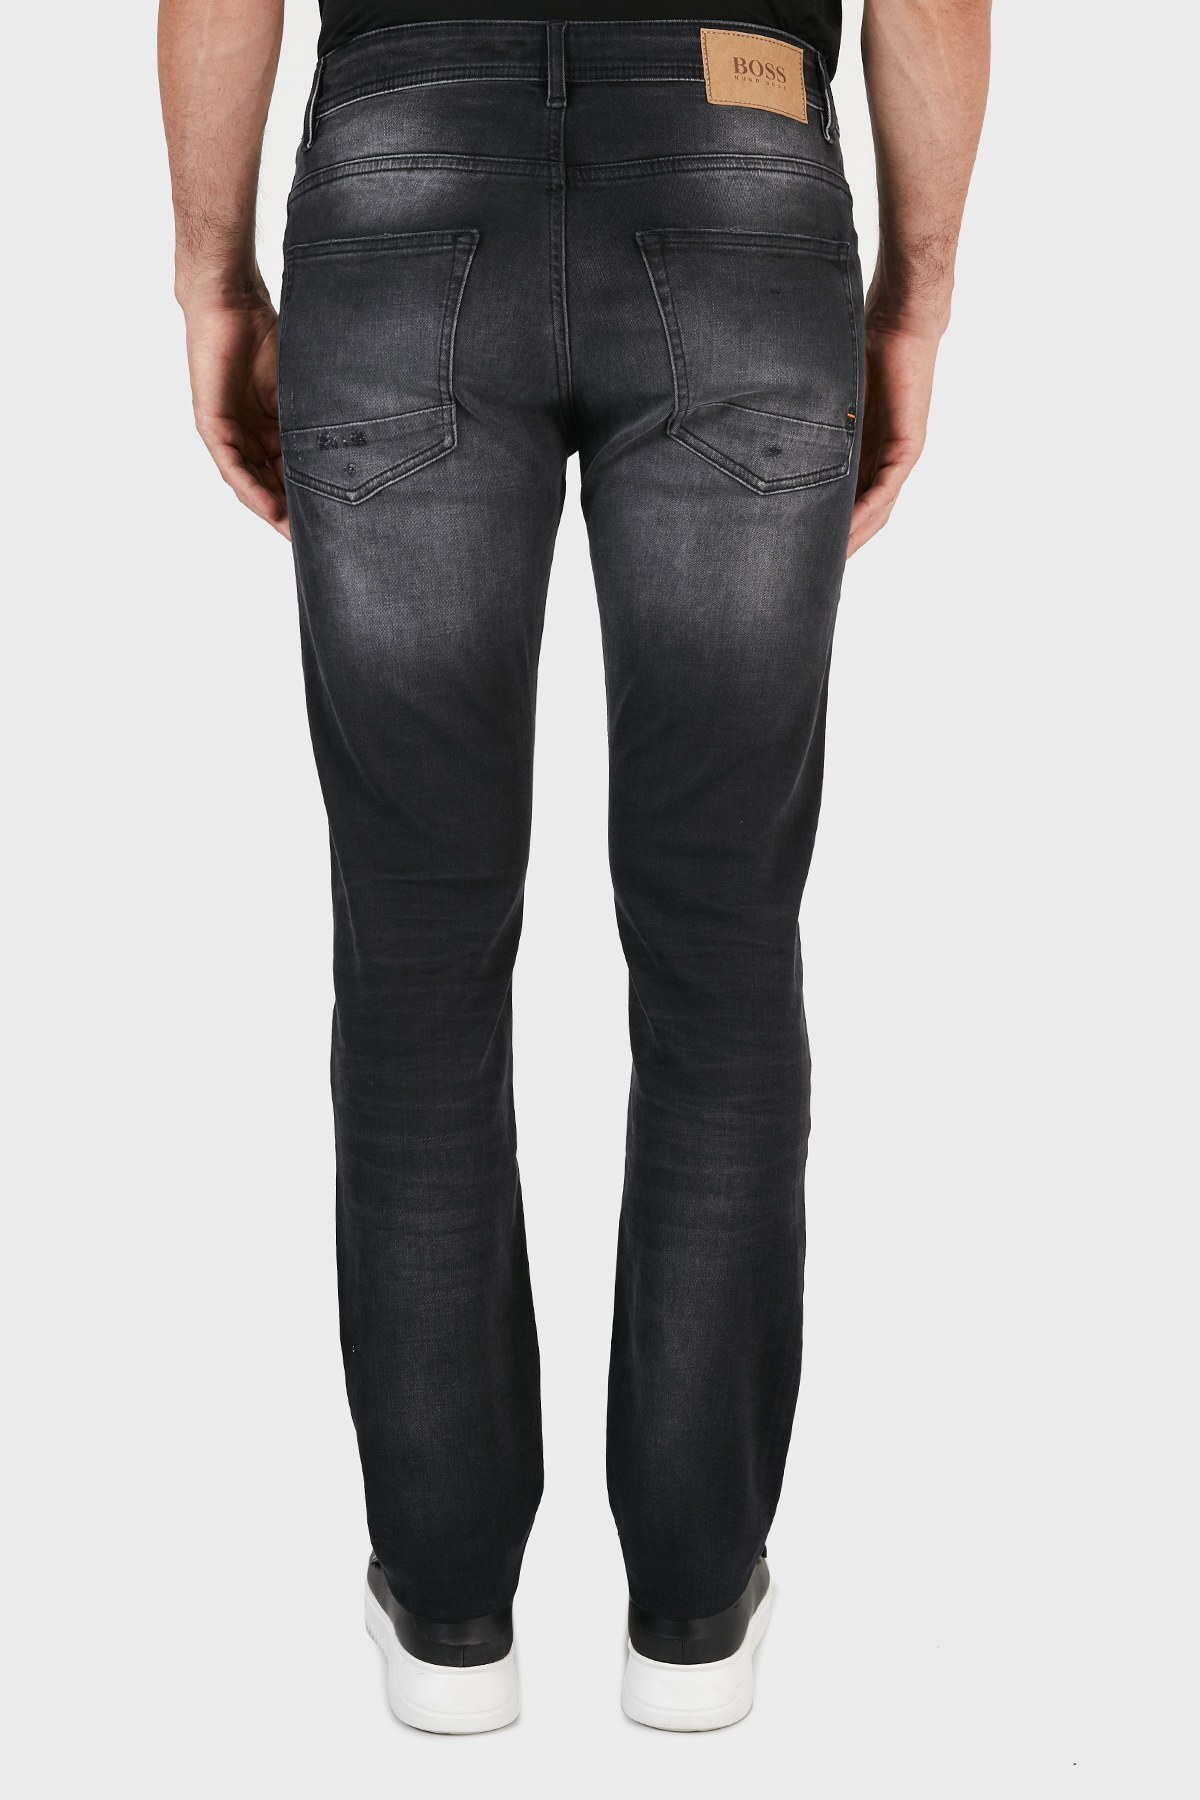 Hugo Boss Slim Fit Cepli Pamuklu Jeans Erkek Kot Pantolon 50458310 015 ANTRASİT